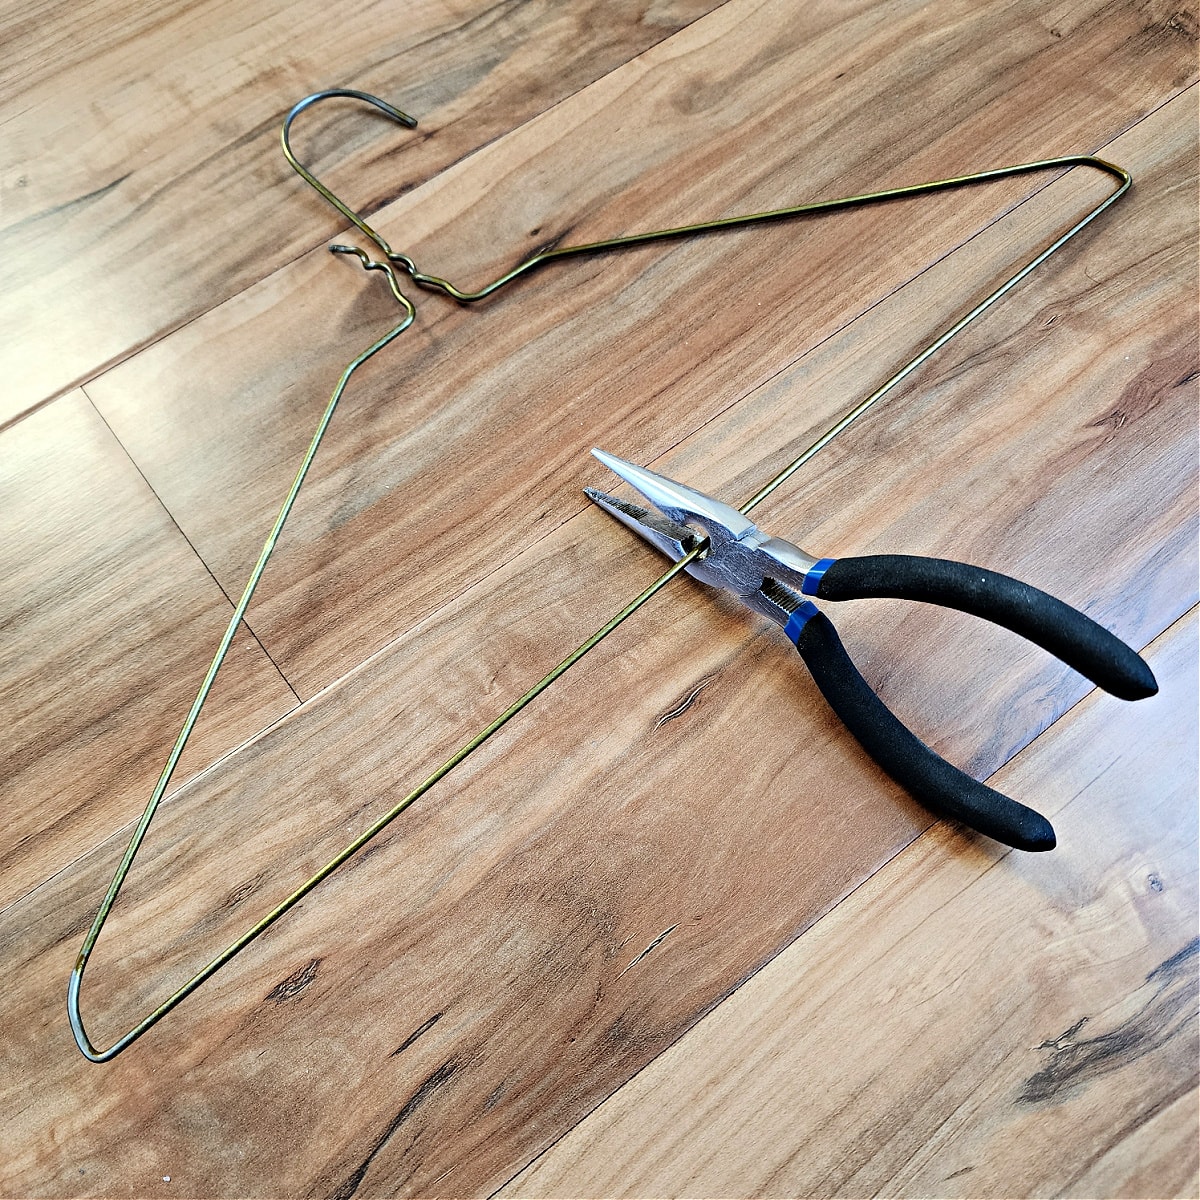 Needle nose pliers cutting long edge of coat hanger in half.